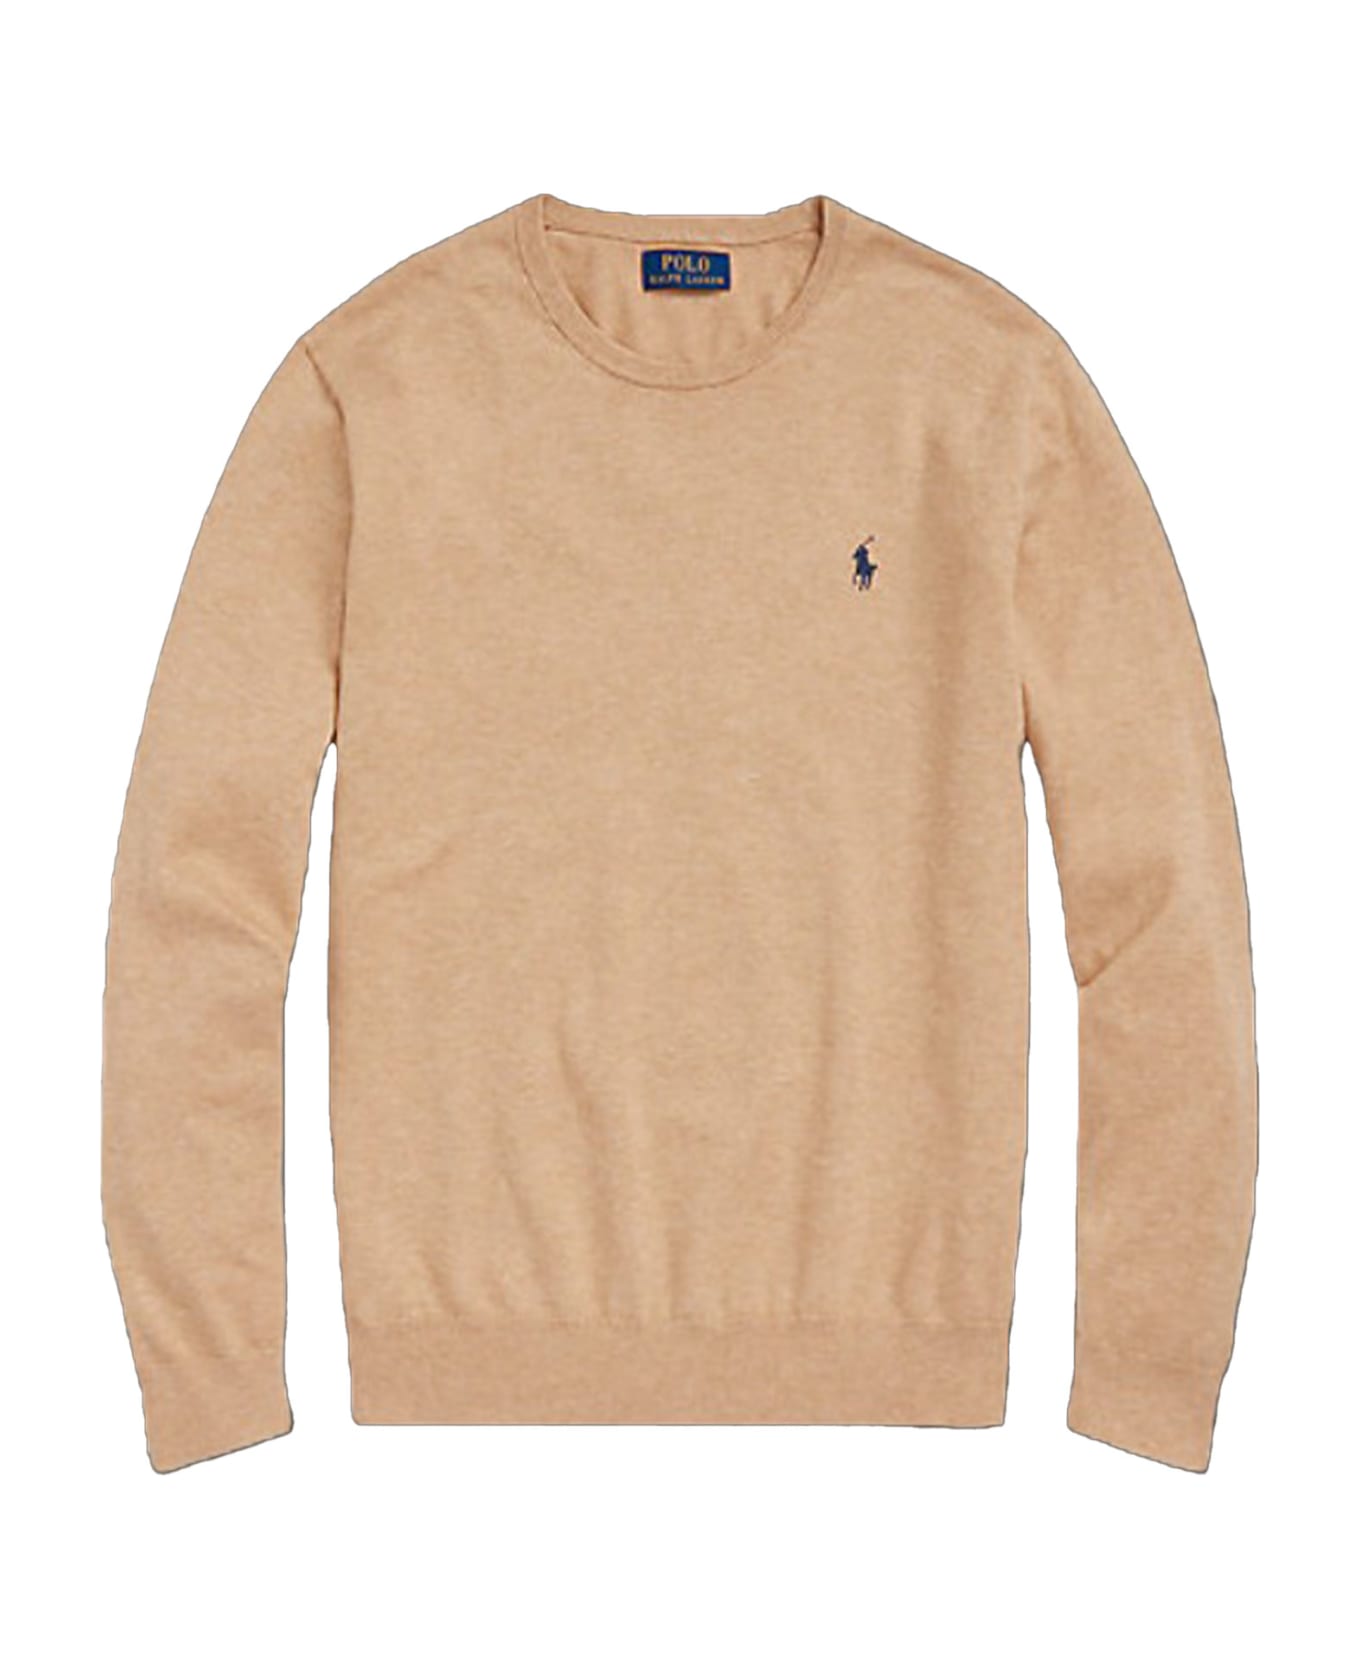 Polo Ralph Lauren Sweater - brown